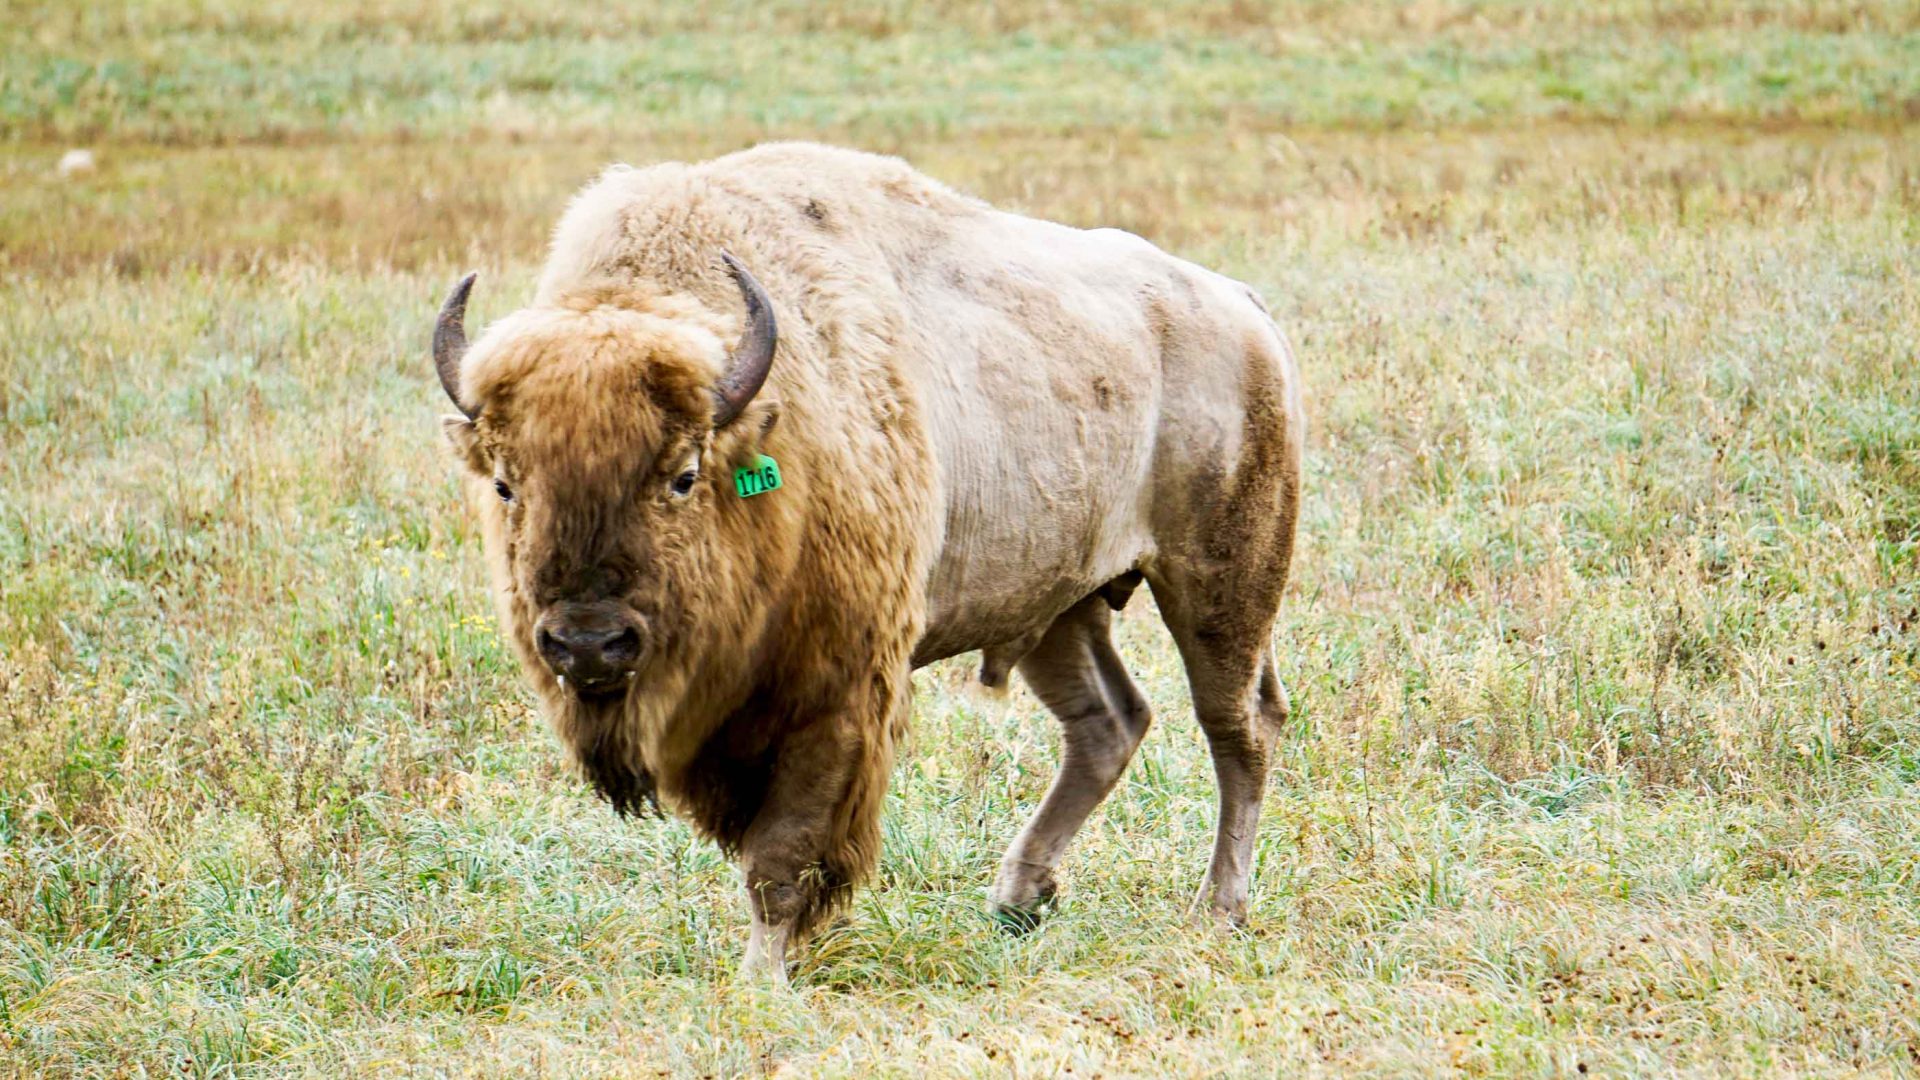 A buffalo in the paddock.